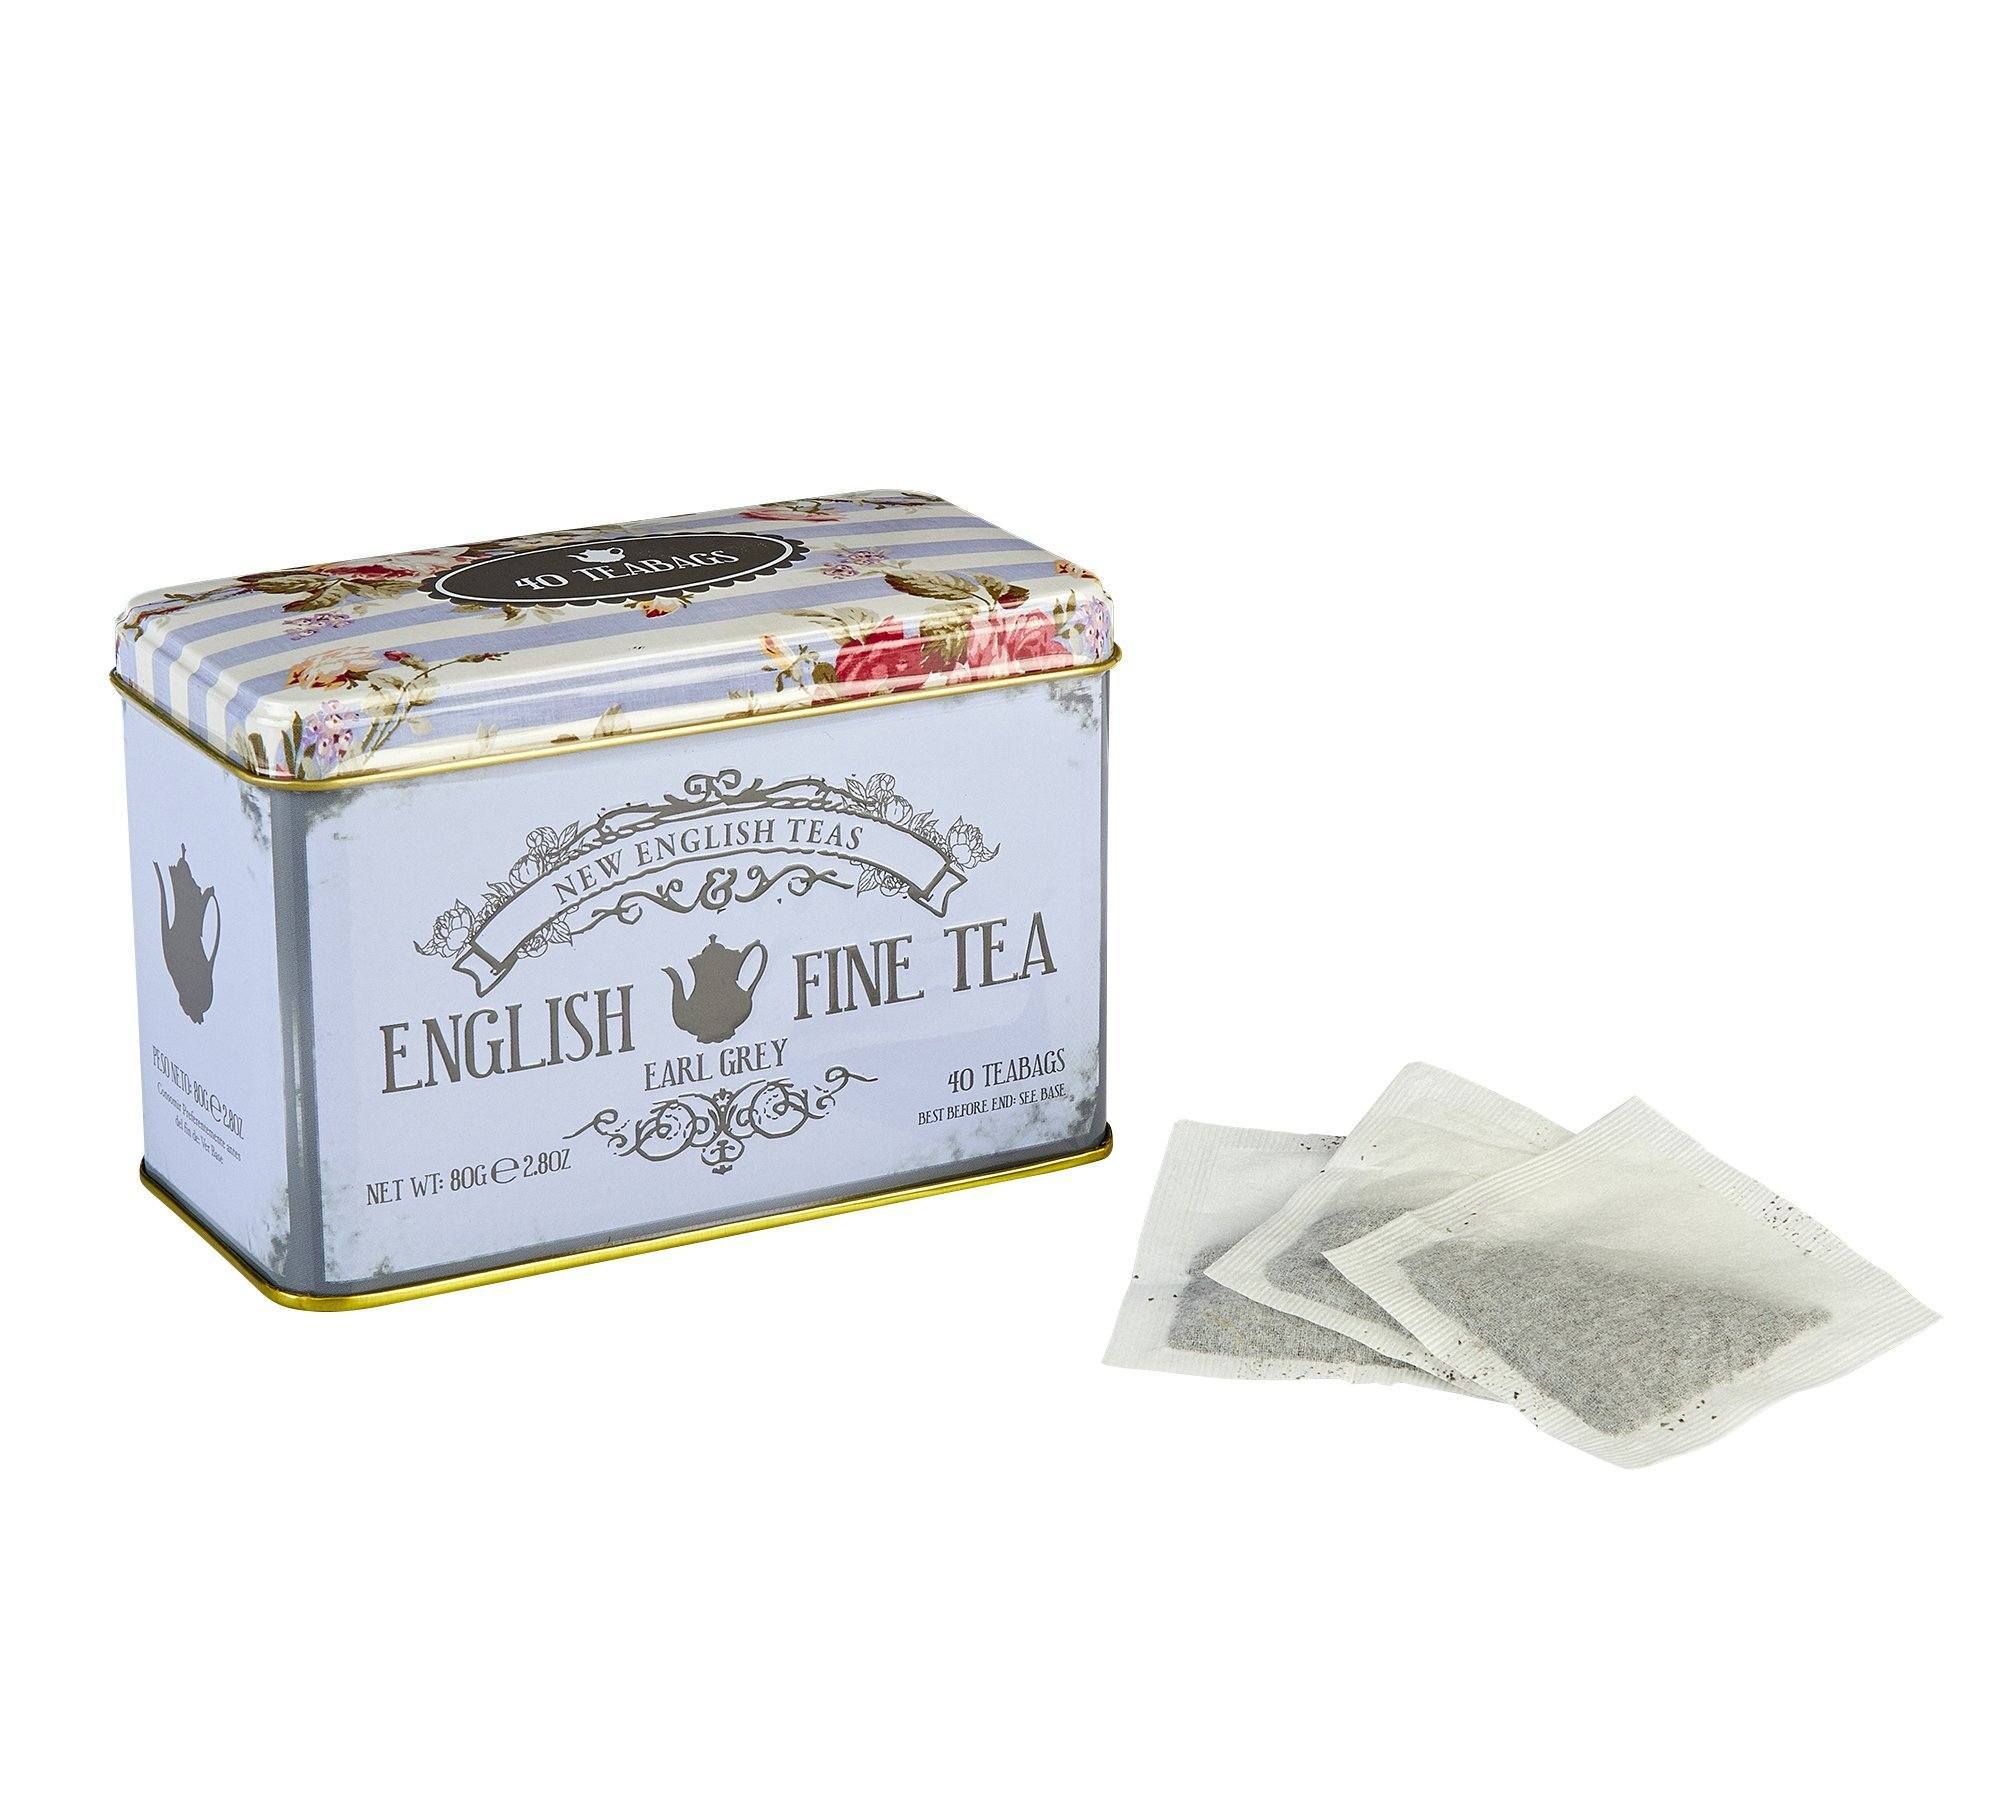 Vintage Floral Fine Earl Grey Tea Tin 40 Teabags